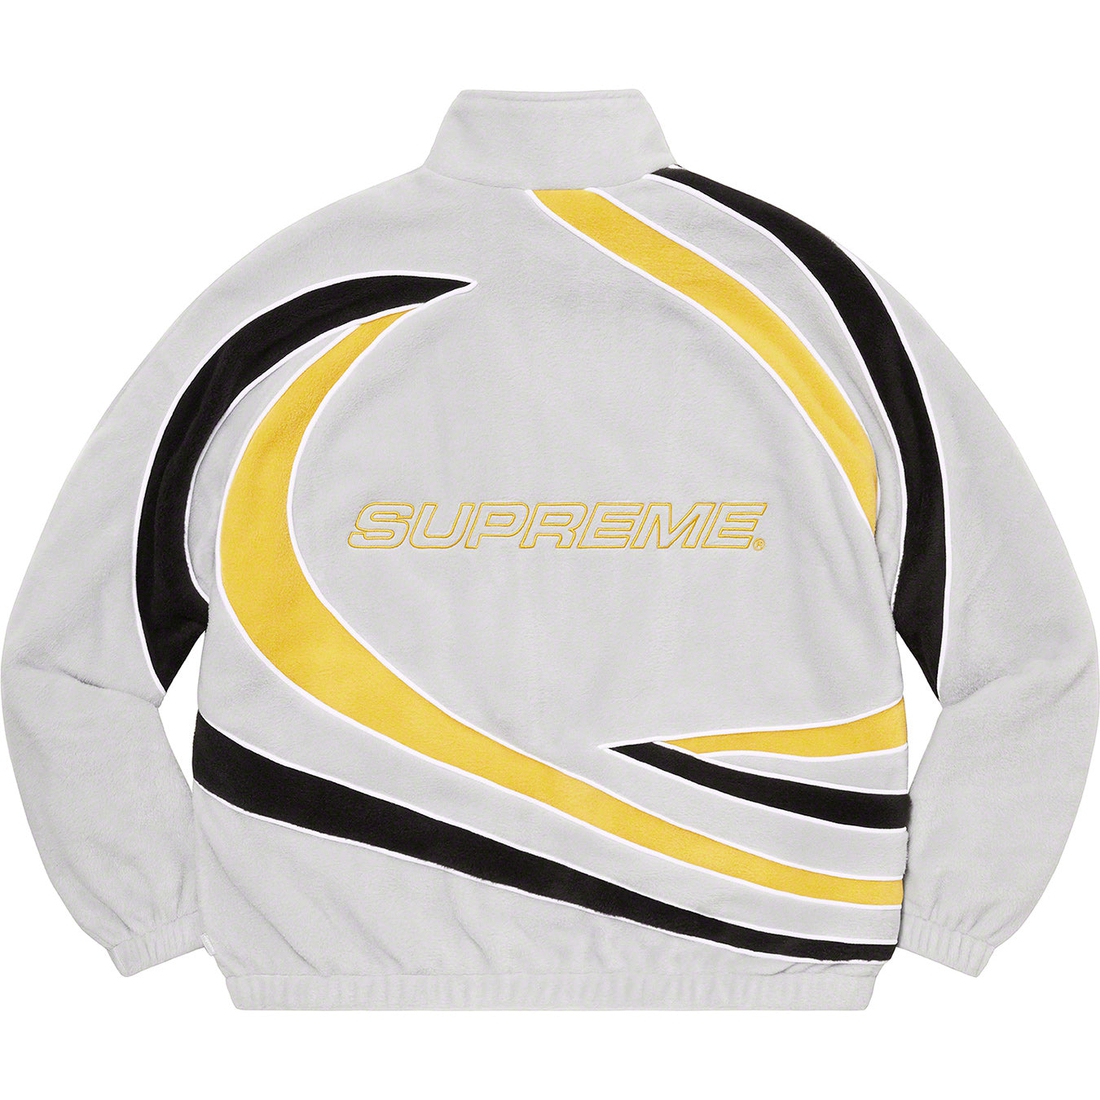 Details on Racing Fleece Jacket Heather Grey from spring summer
                                                    2023 (Price is $218)